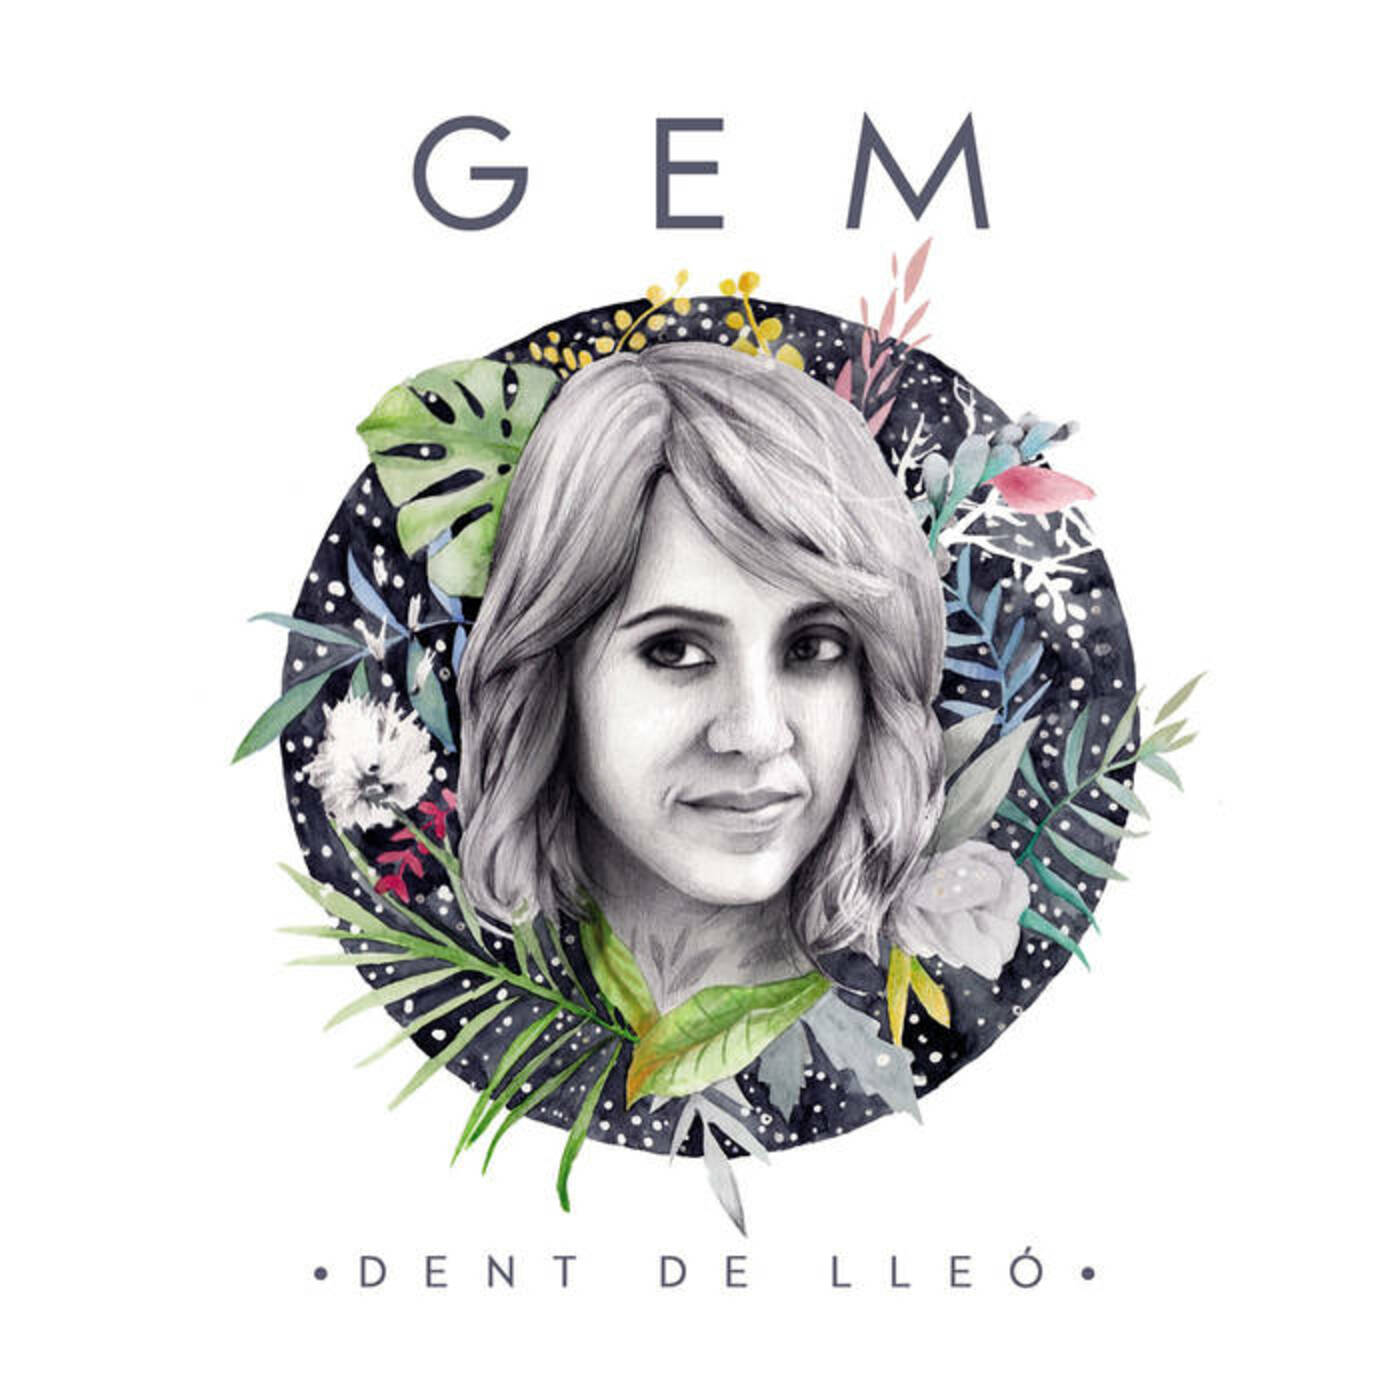 Gem - Dent de lleó | musica en valencià